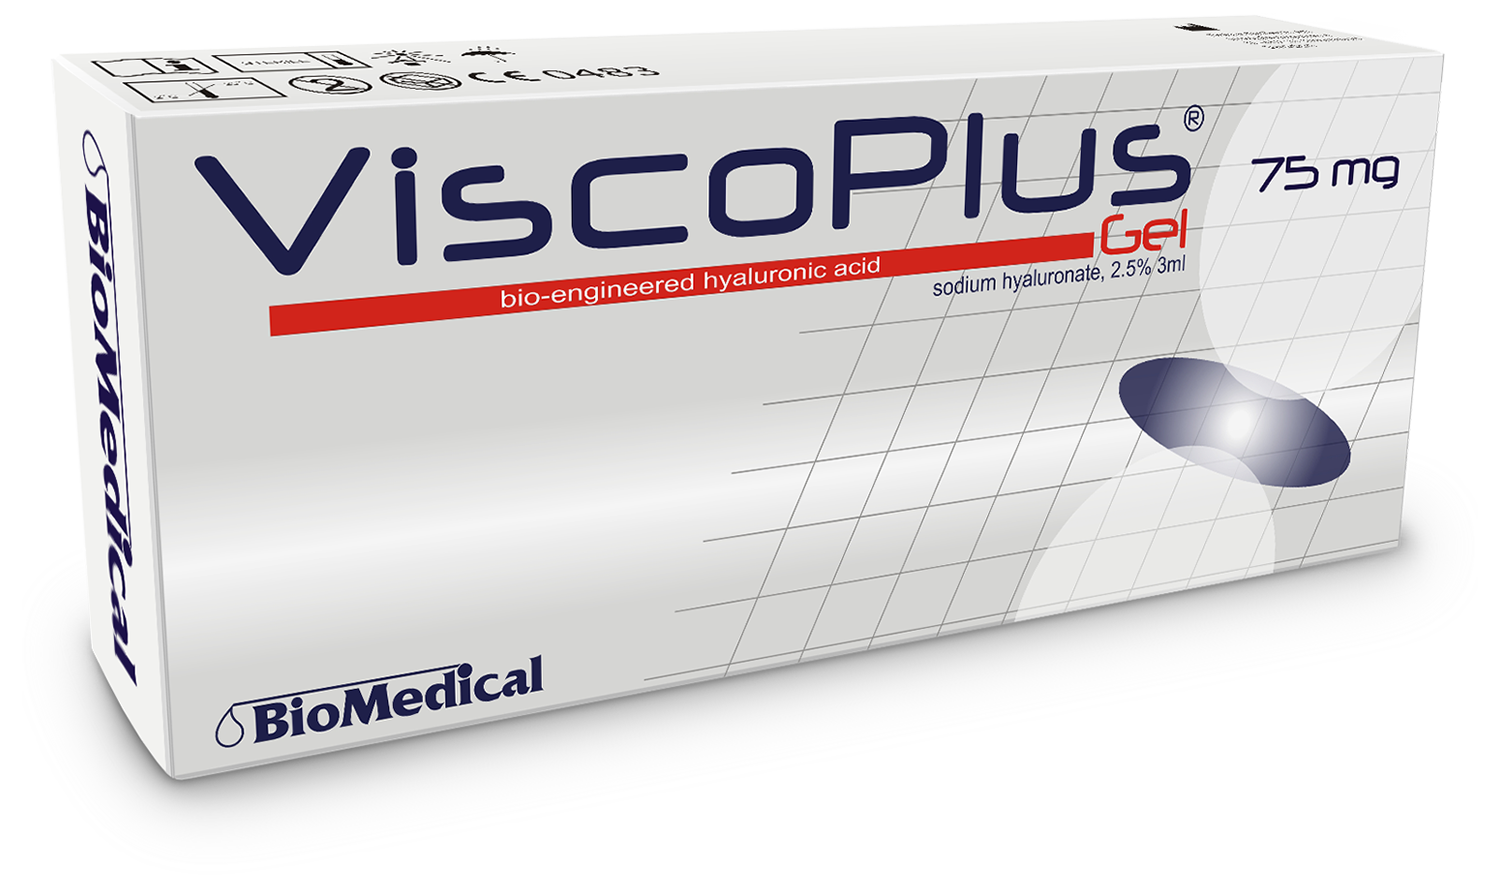 ViscoPlus Gel intra-articular single infiltration hyaluronic acid